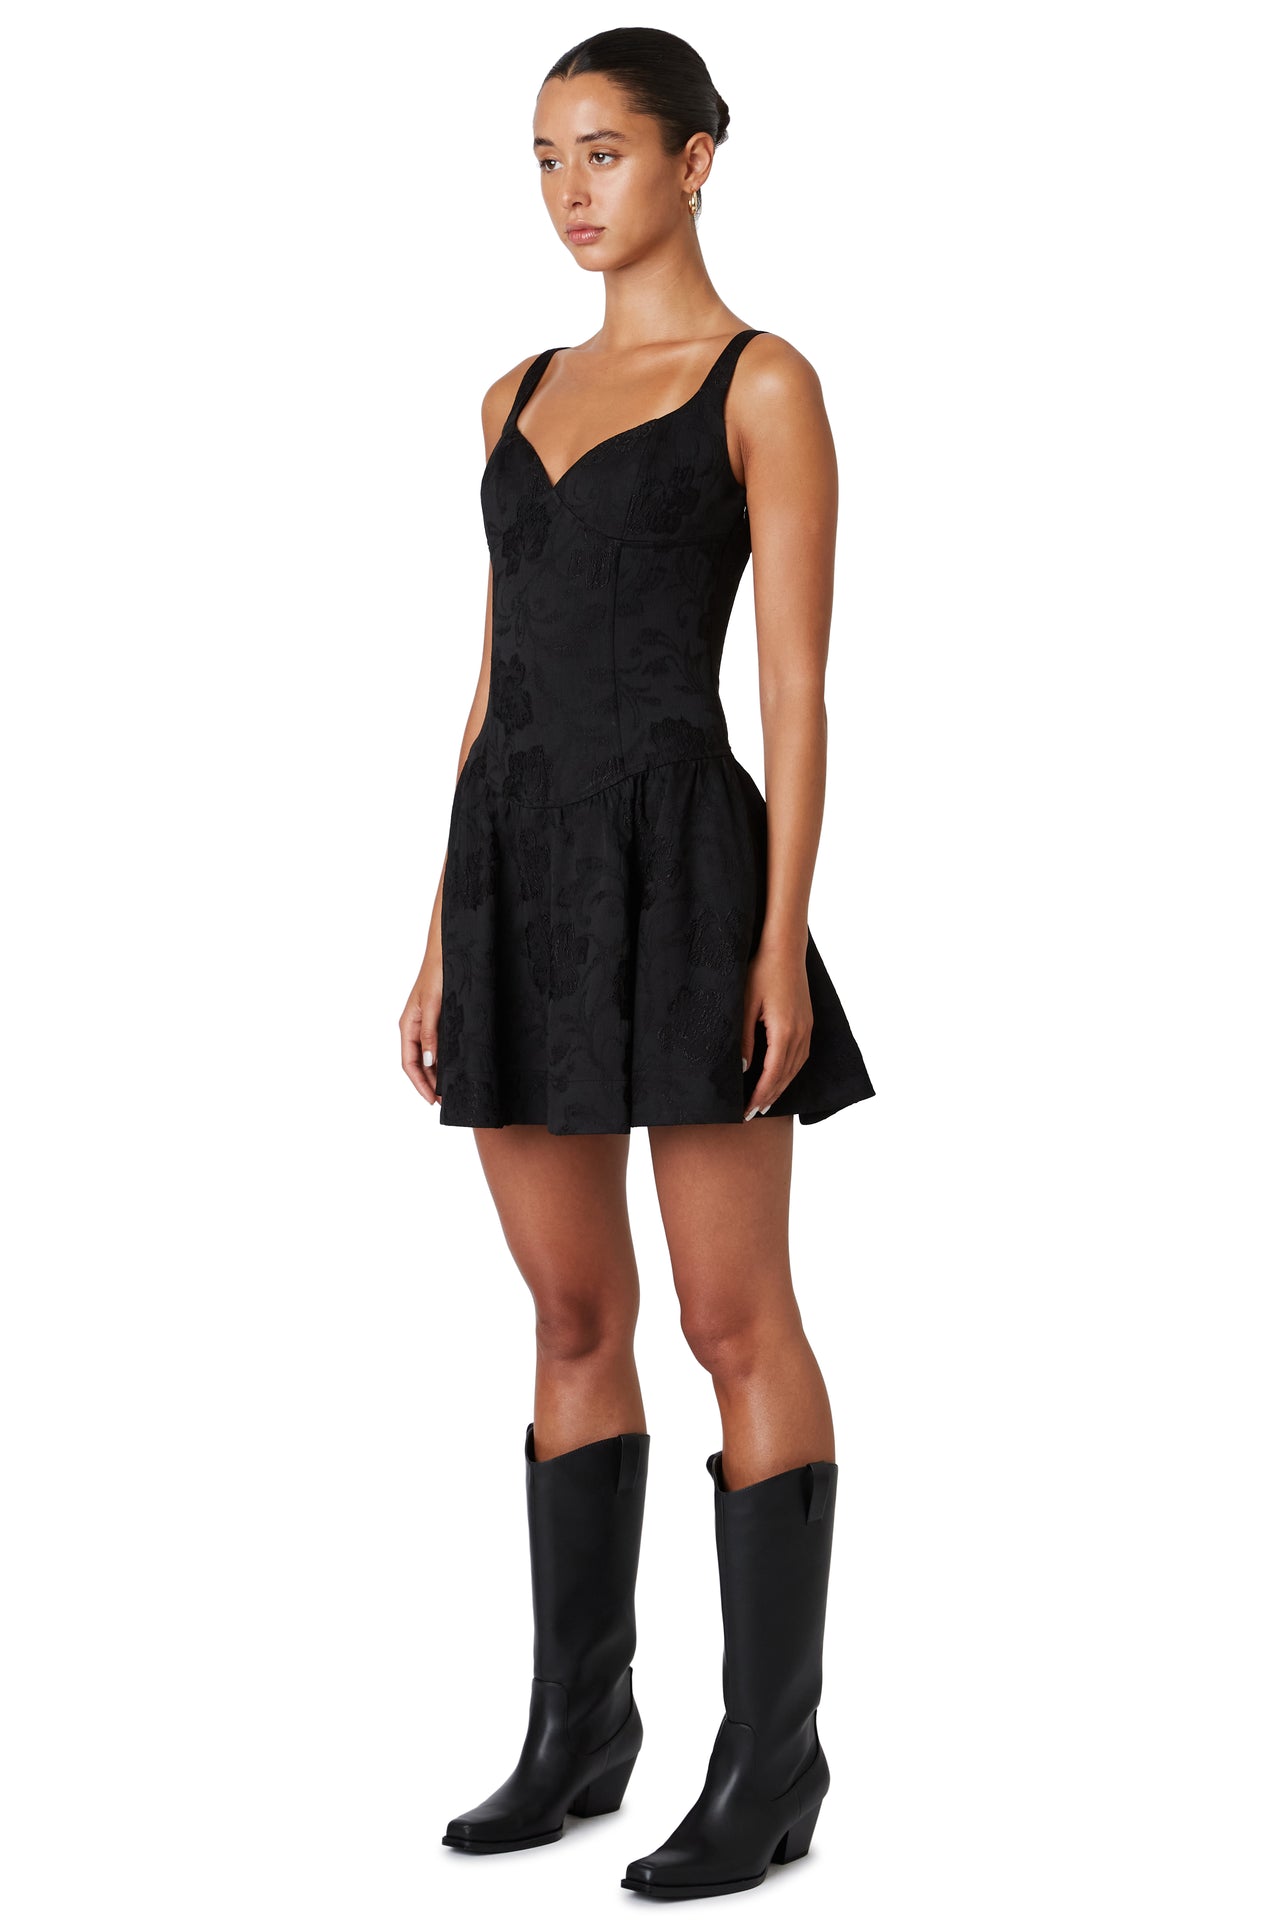 Napoli Mini Dress Black, Mini Dress by Nia | LIT Boutique